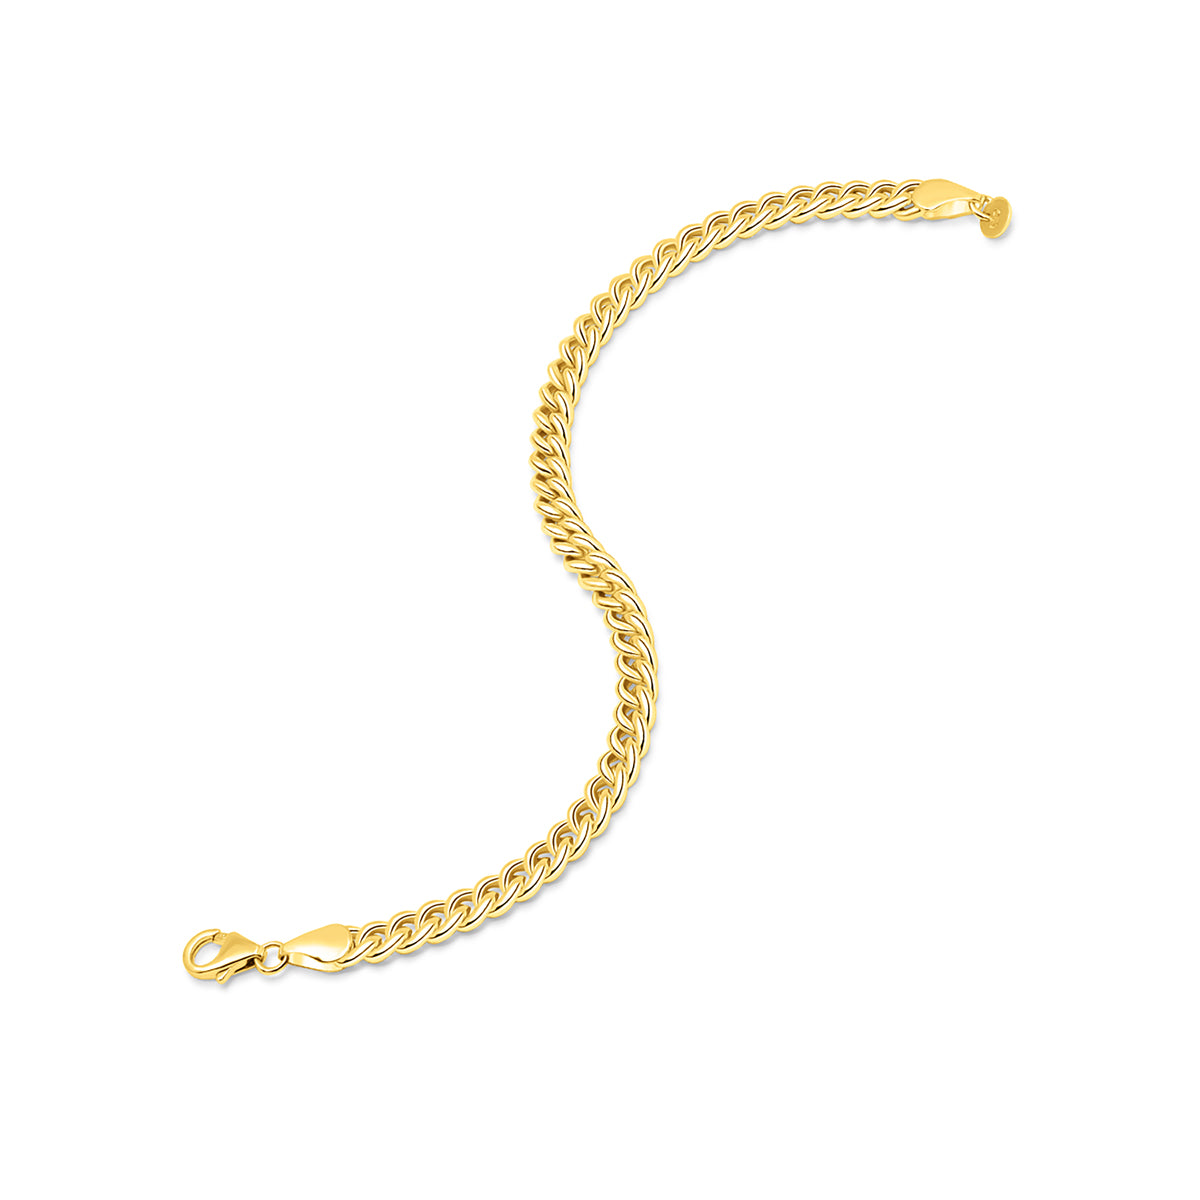 Simple gold chain link bracelet